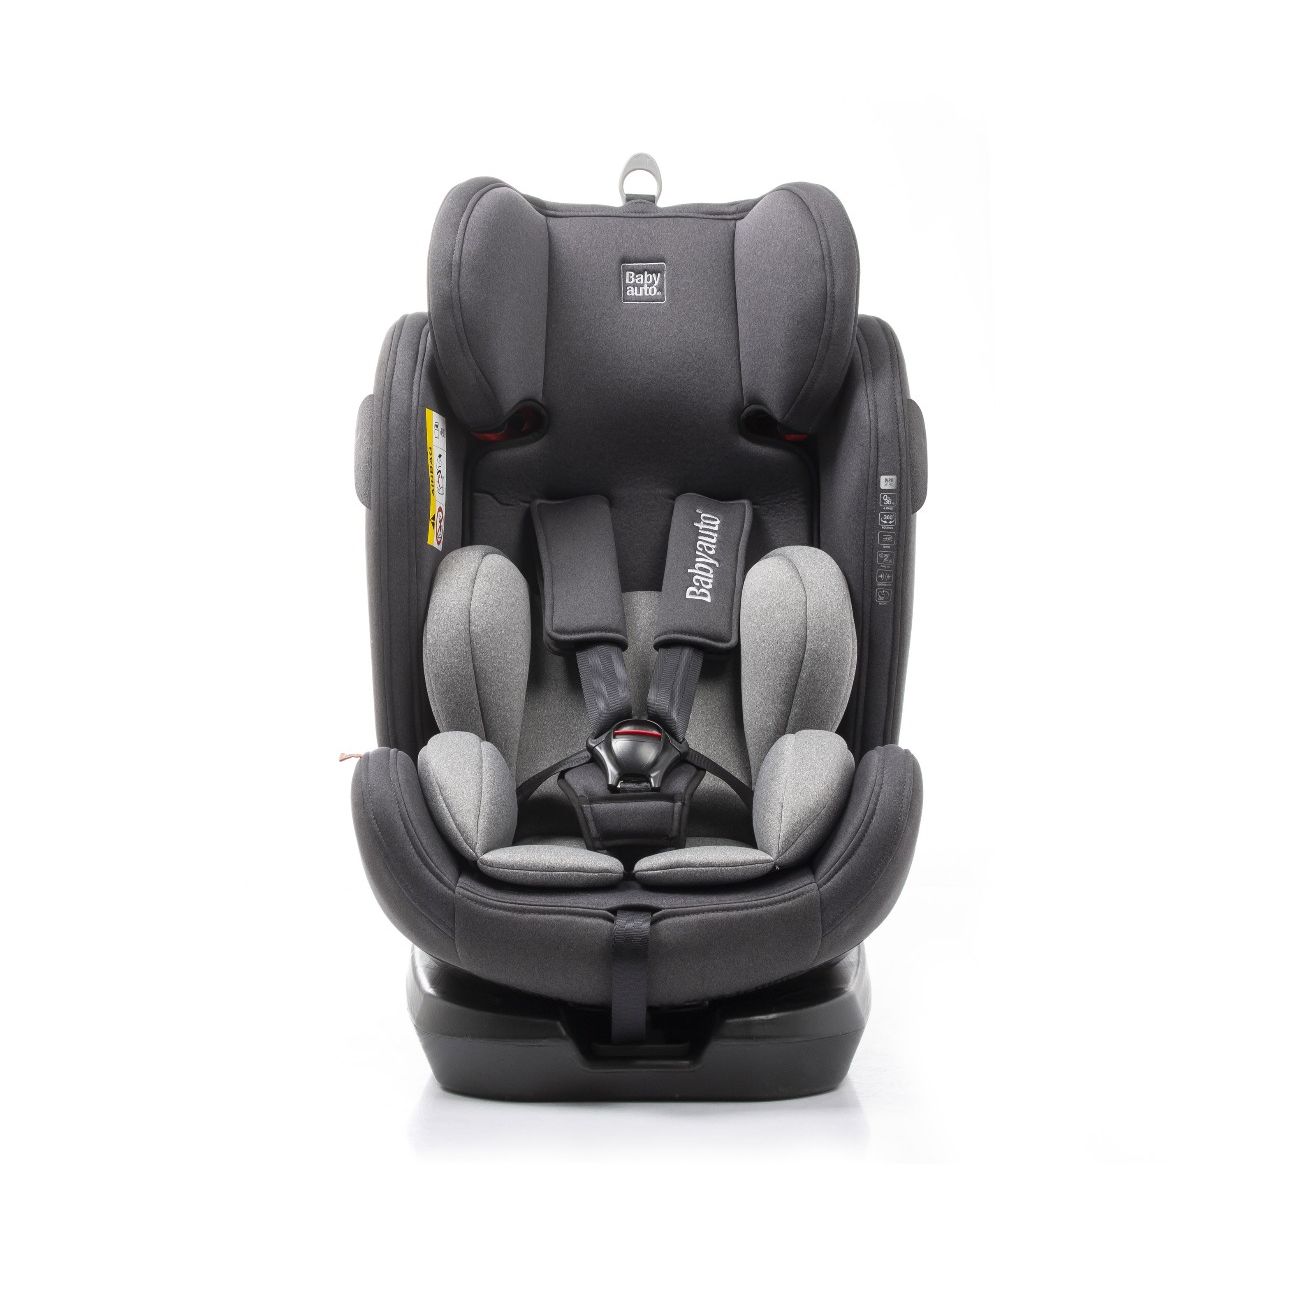 Silla de coche Multimax BabyAuto : Opiniones